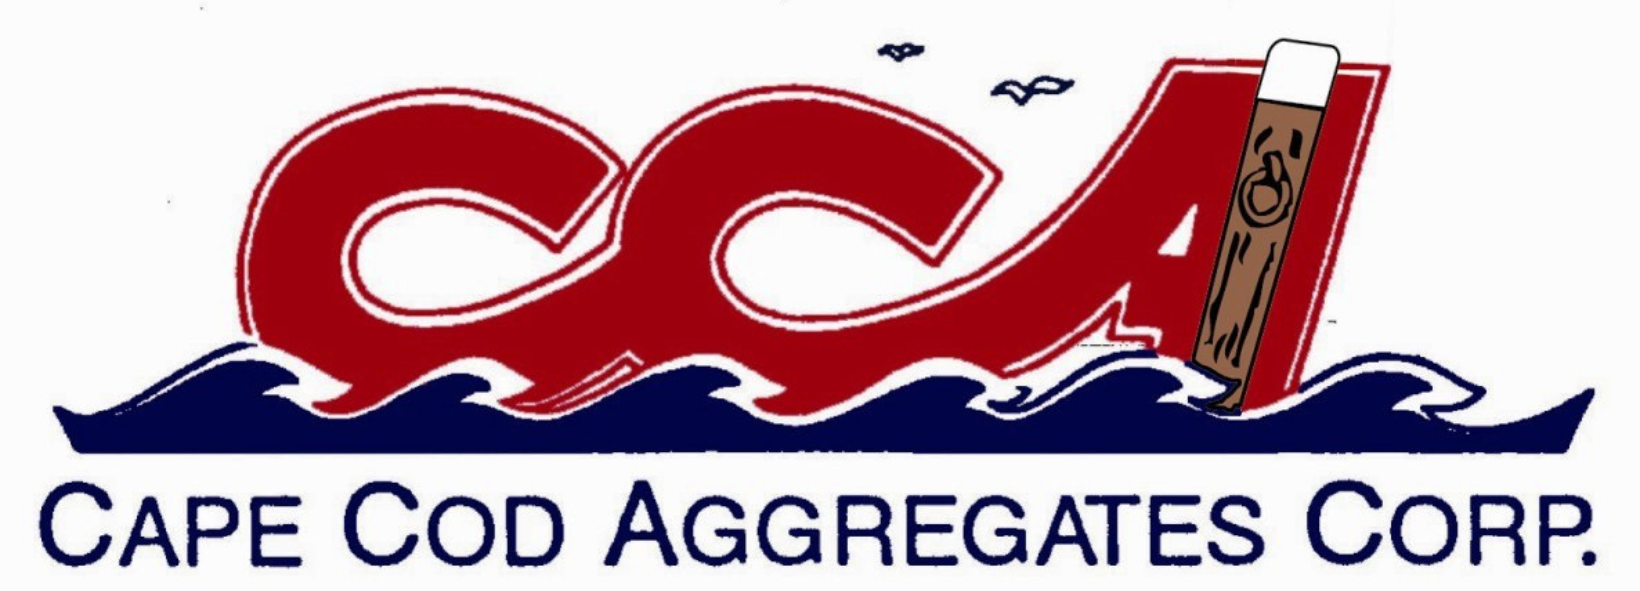 CCA Logo.png